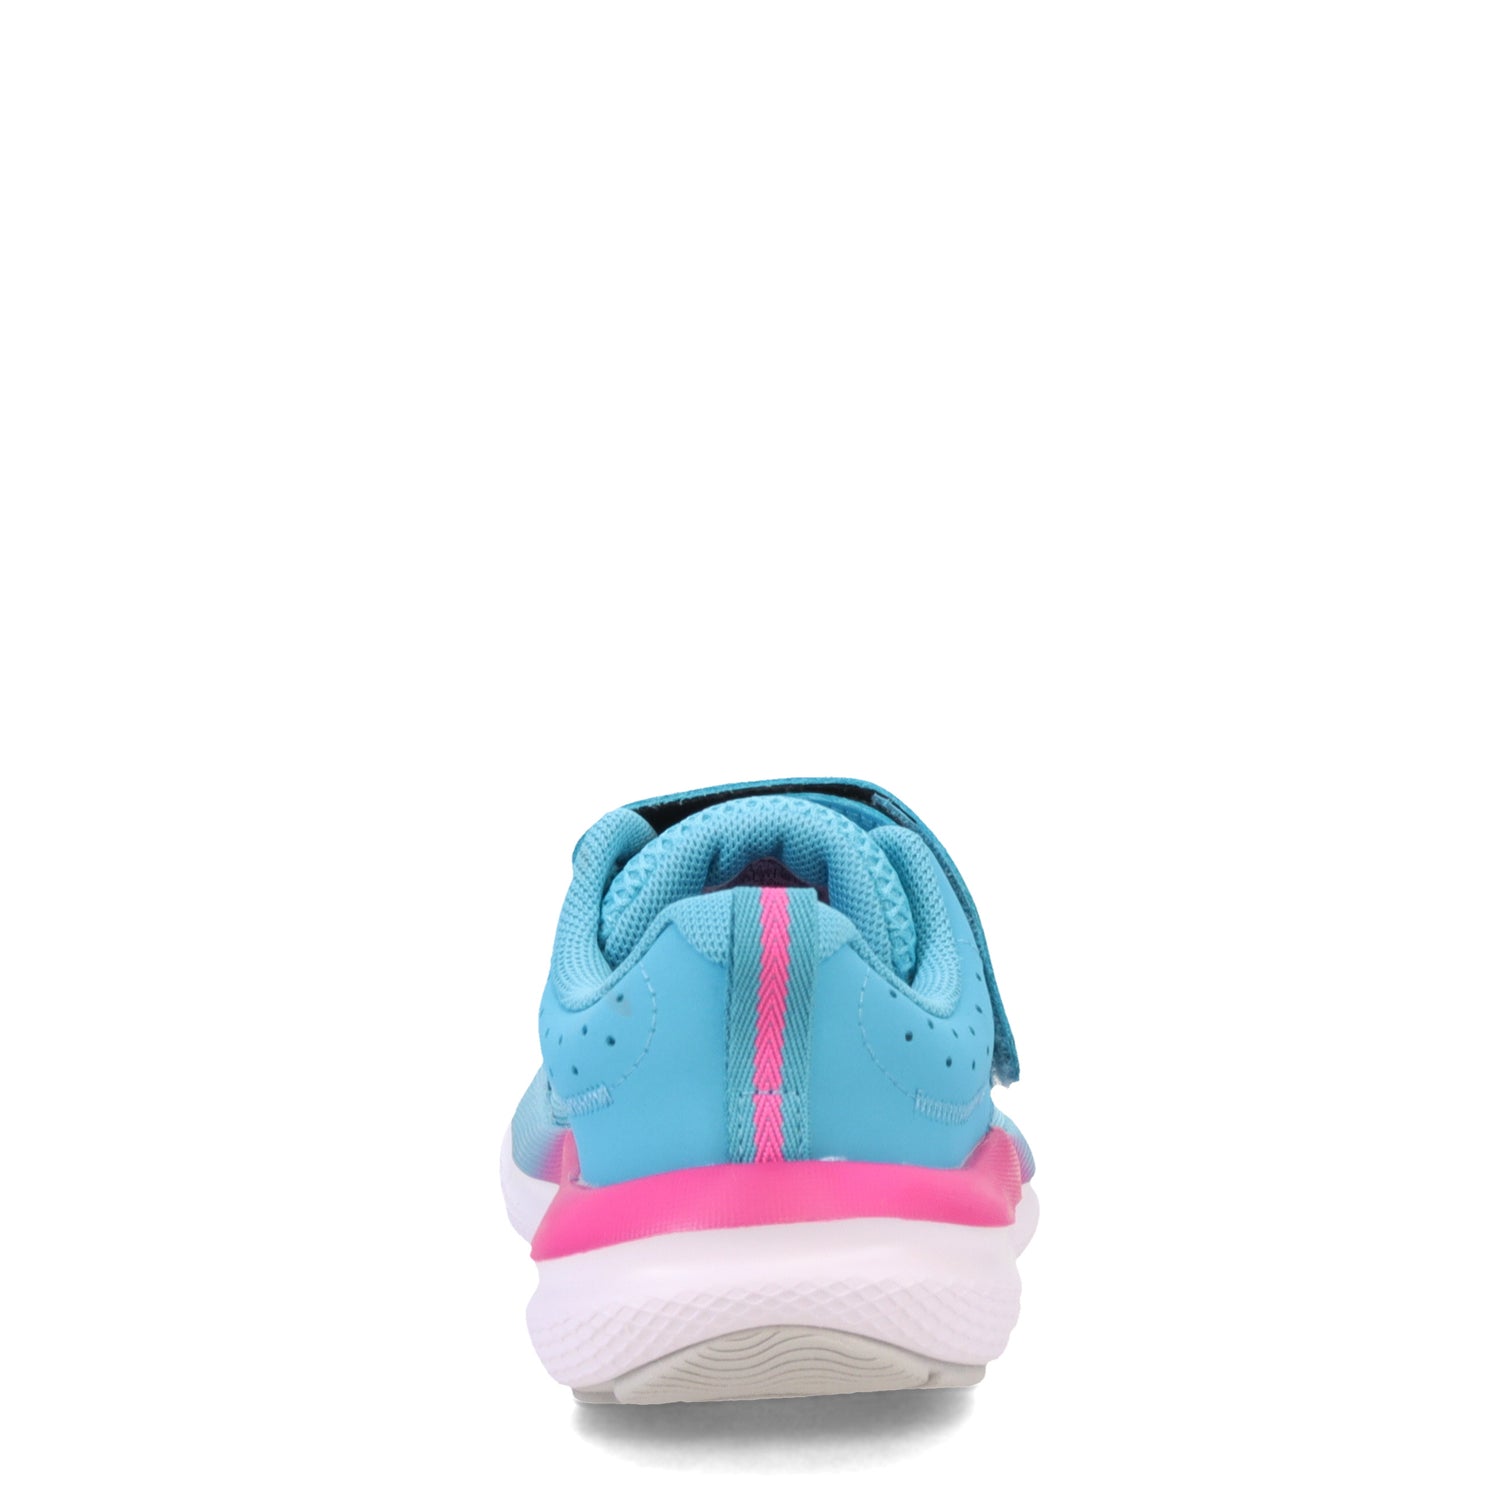 Peltz Shoes  Girl’s Under Armour Assert 10 AC Running Shoe - Little Kid AC Glacier Blue/Halo Grey/Rebel Pink 3026190-400